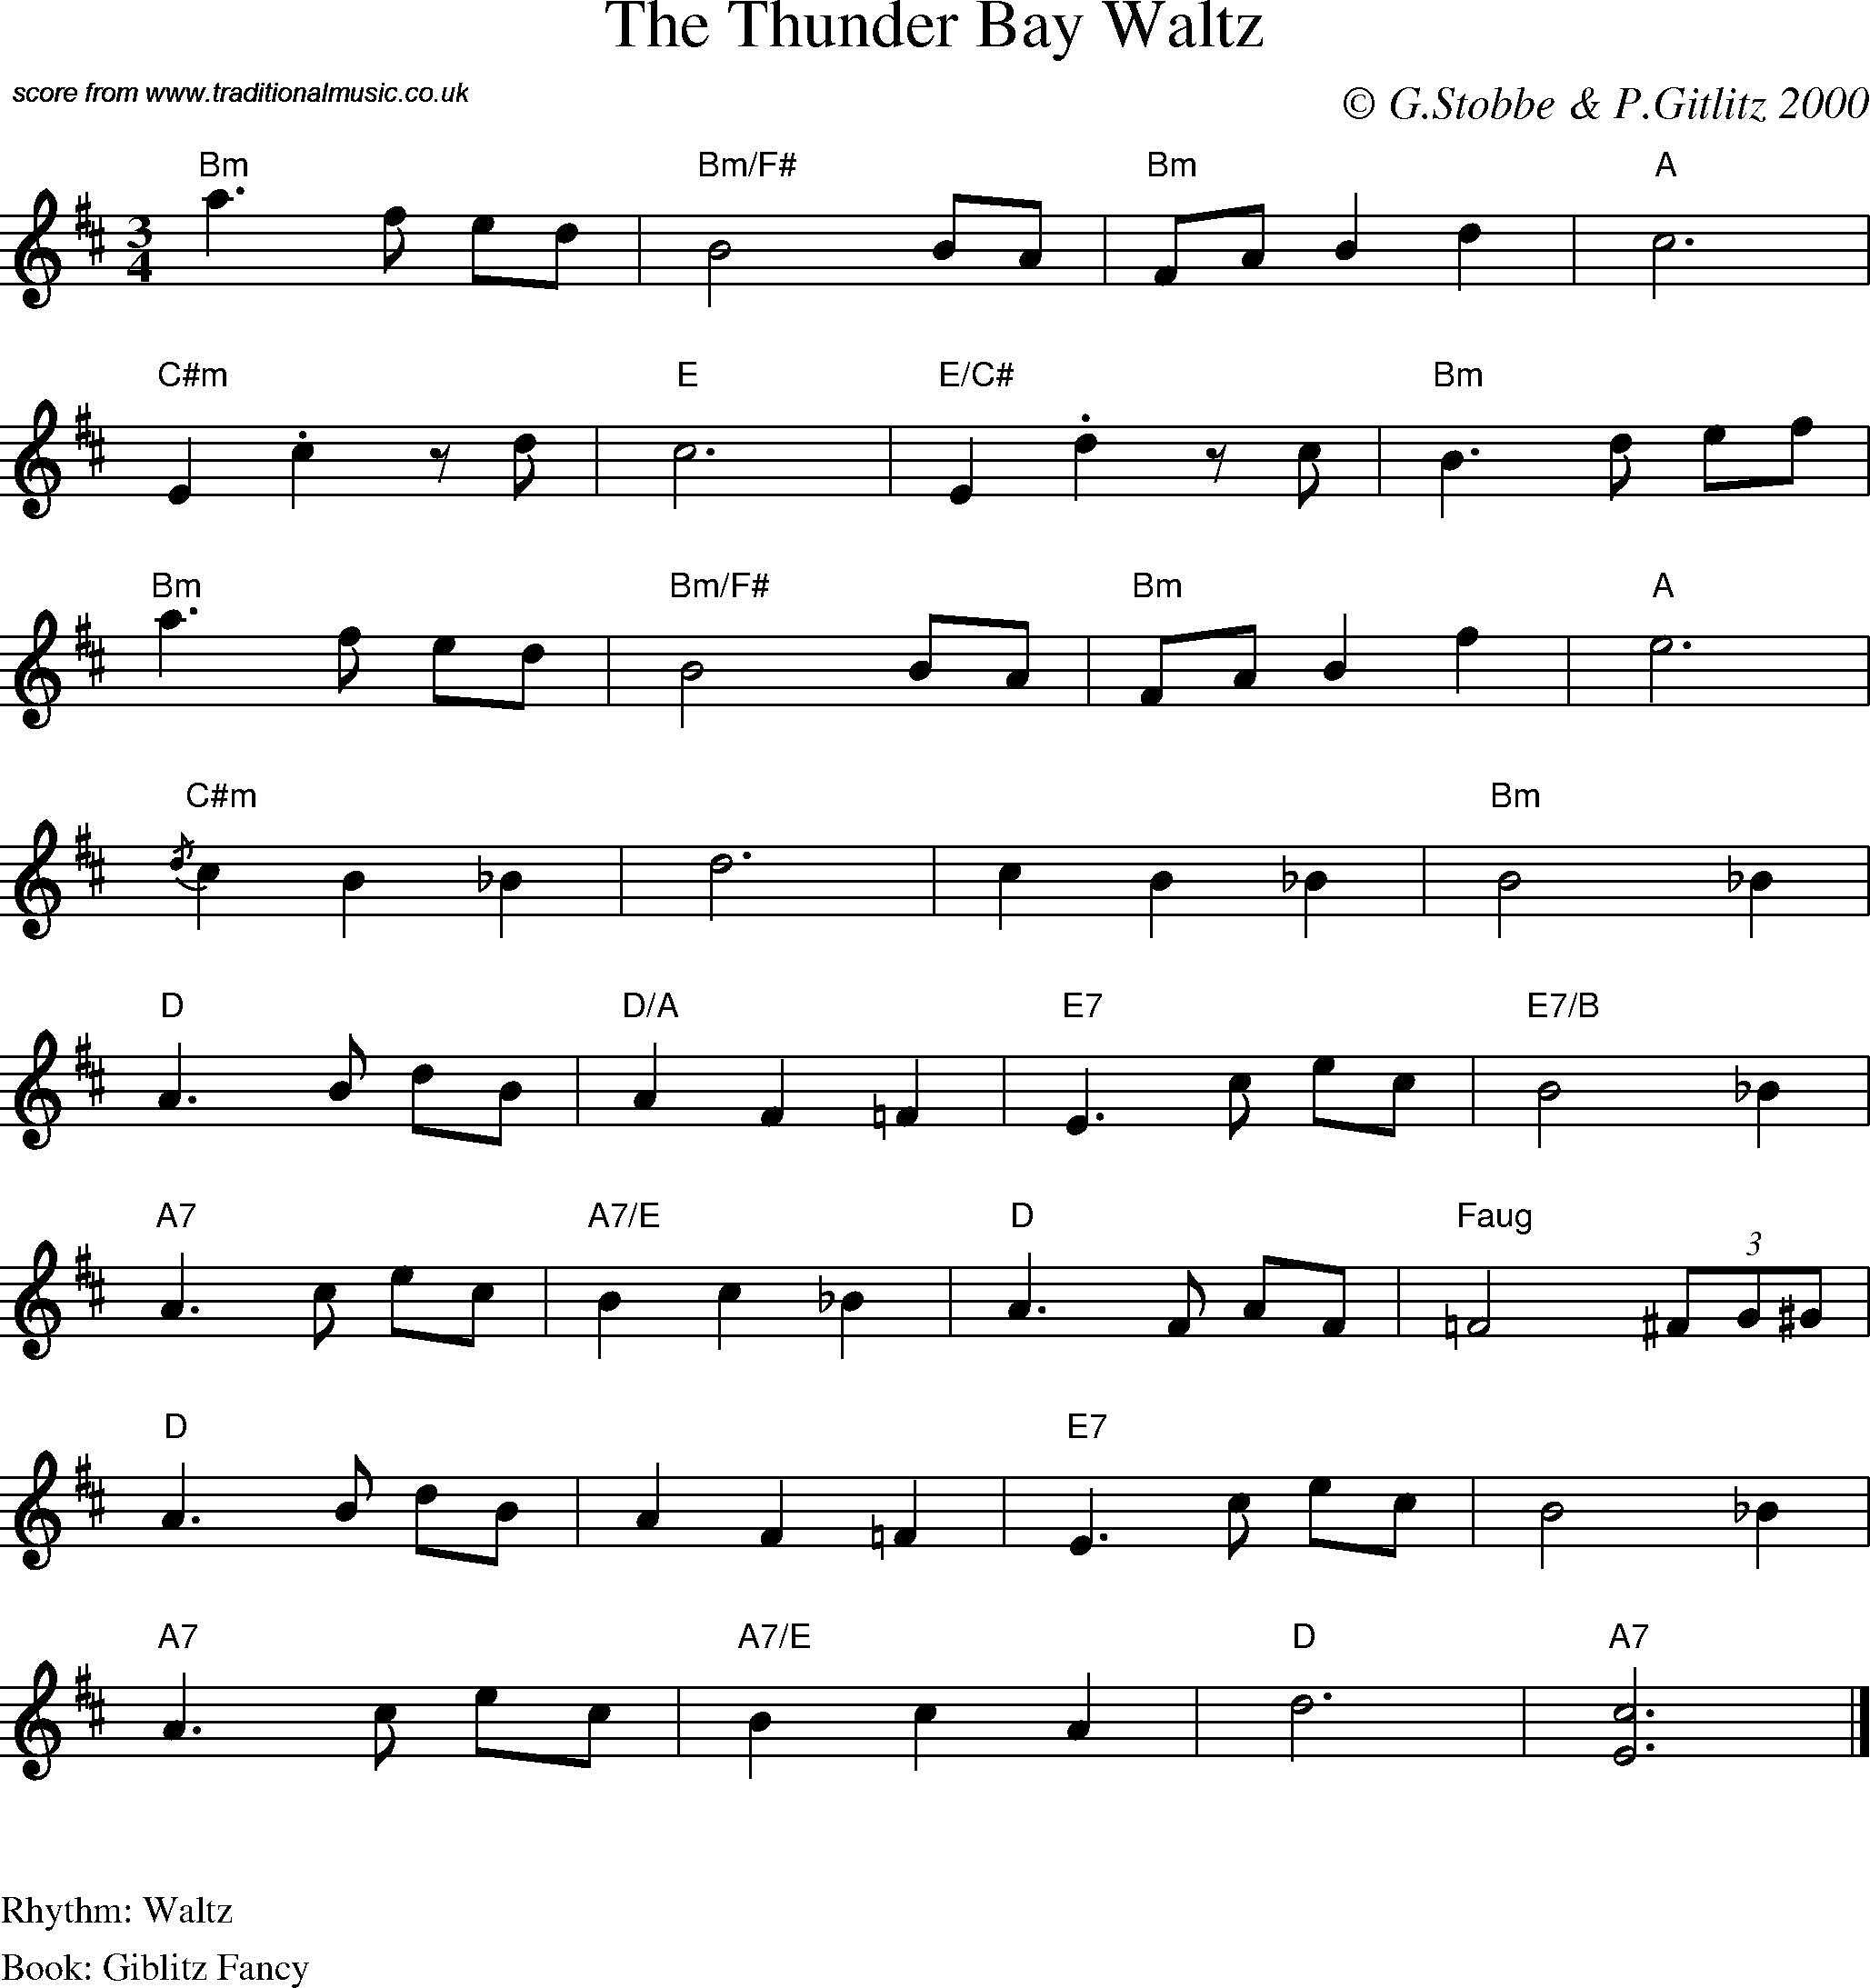 Sheet Music Score for Waltz - The Thunder Bay Waltz